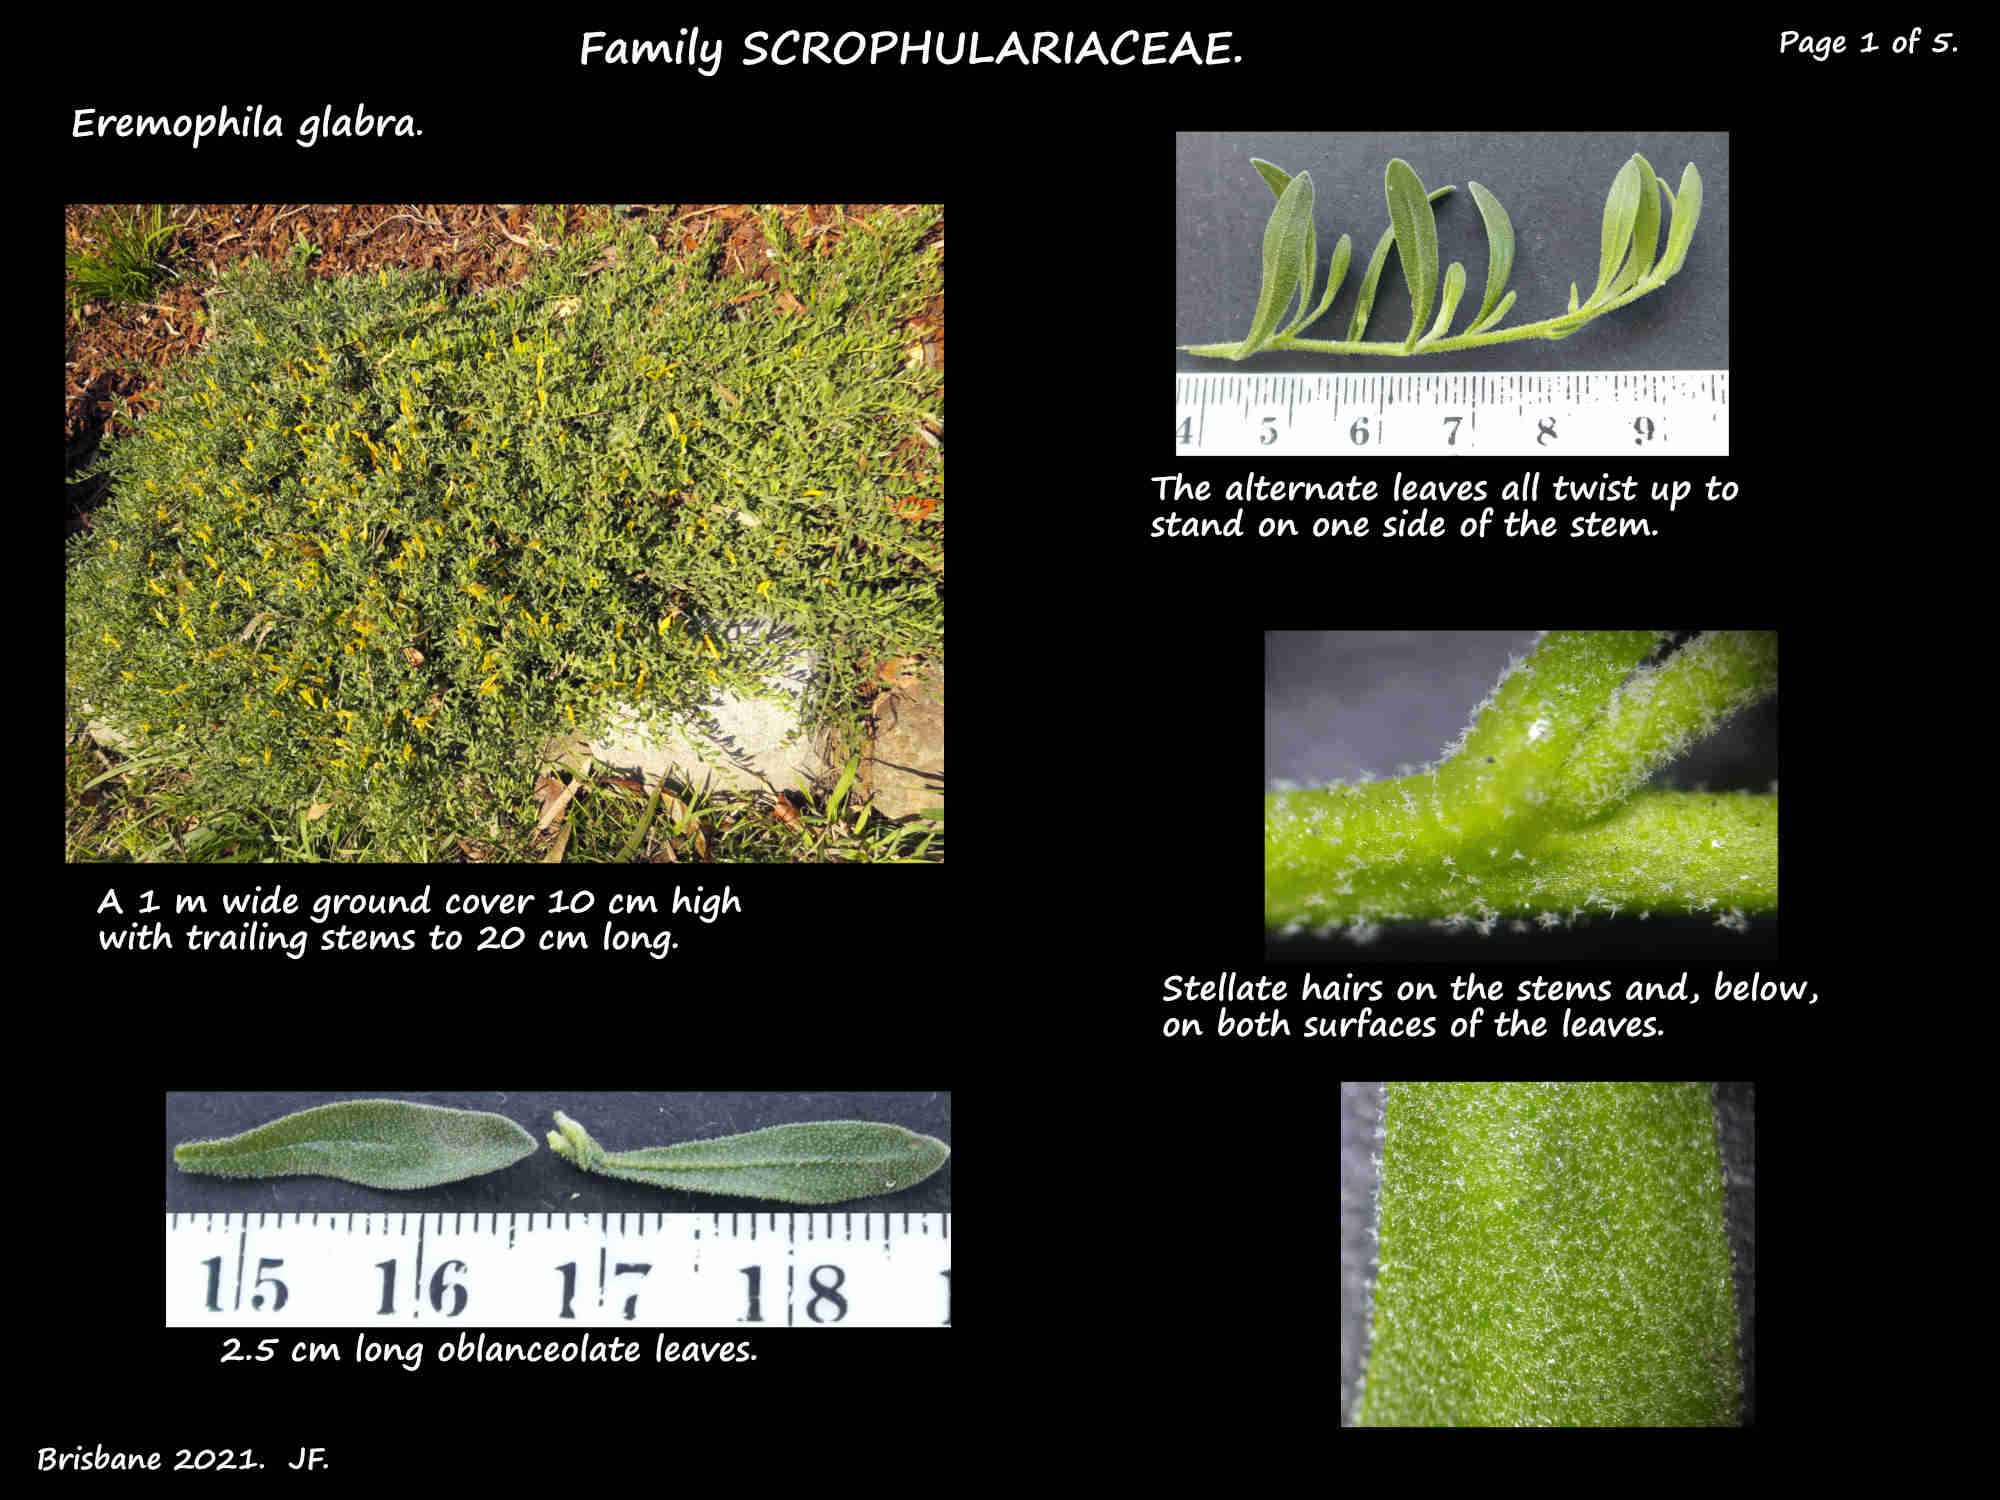 1 Eremophila glabra plant & leaves